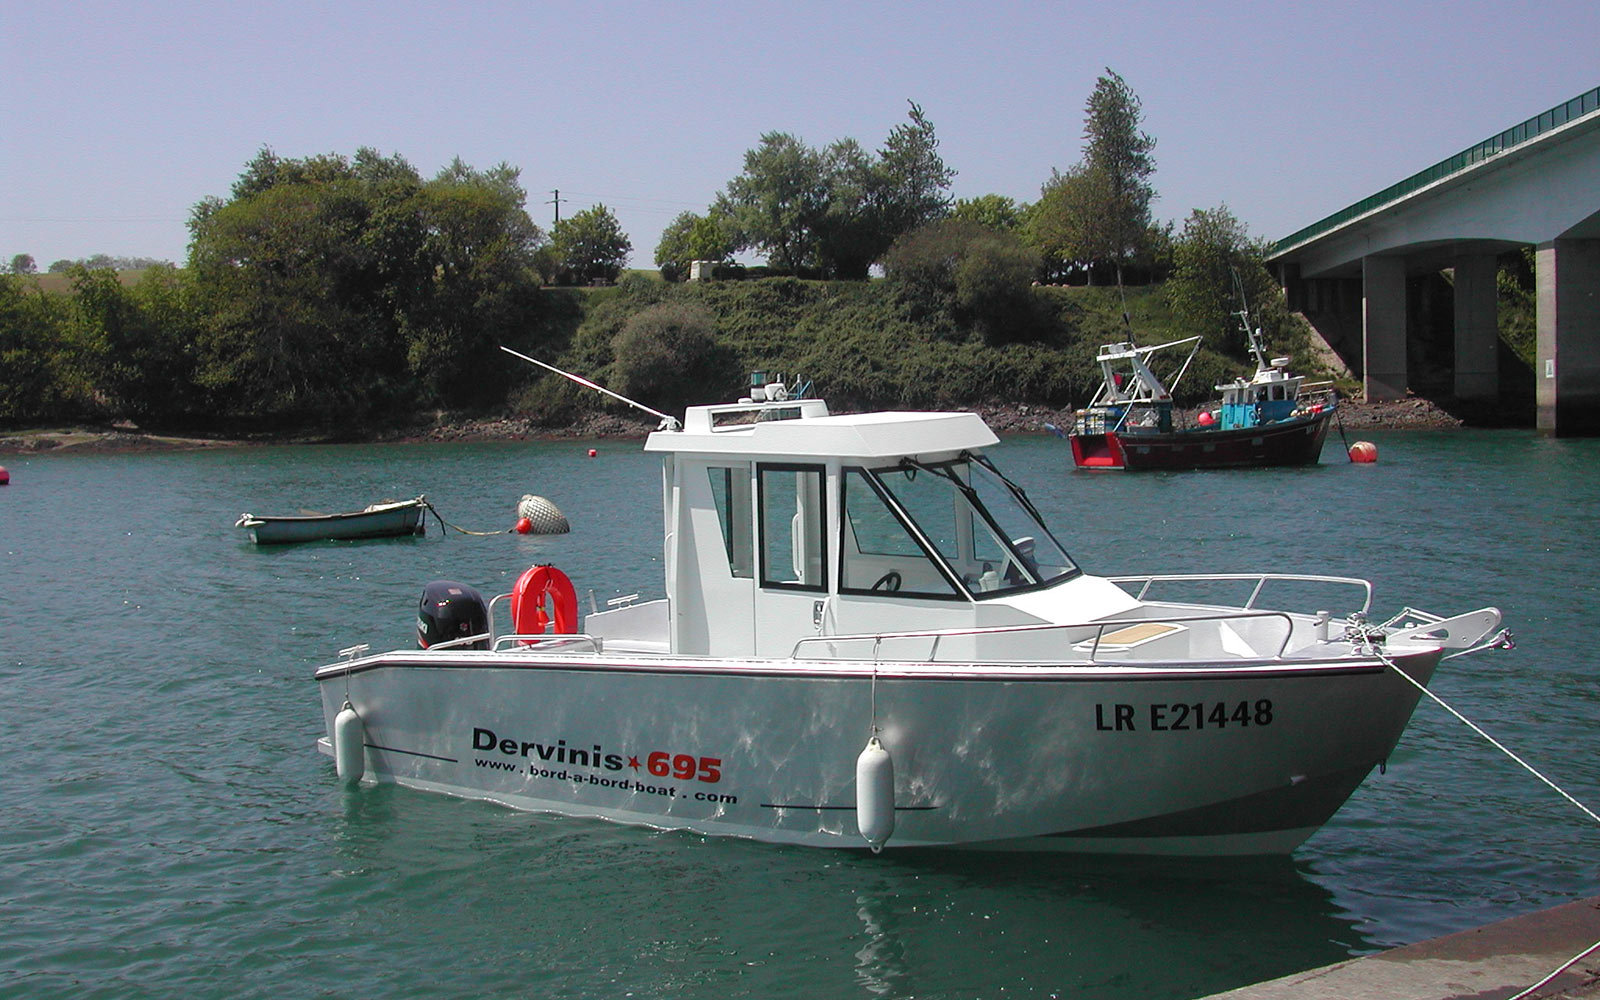 dervinis-695-bateau-aluminium-4.jpg